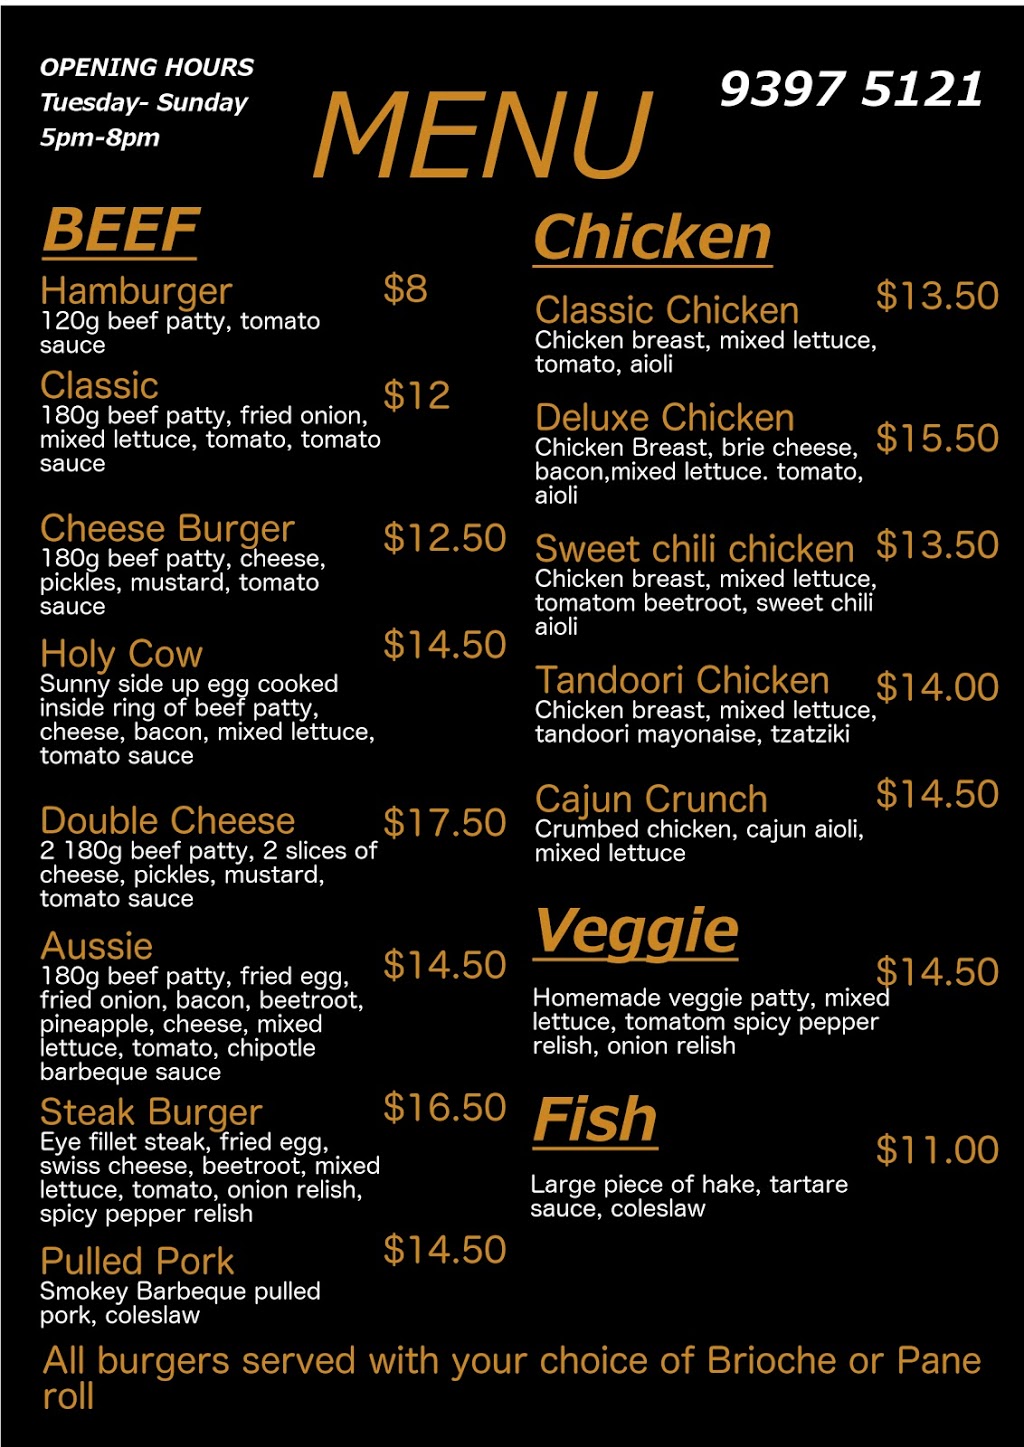 Roleystone Fish & Chips | restaurant | 6/21 Jarrah Rd, Roleystone WA 6111, Australia | 0893975121 OR +61 8 9397 5121